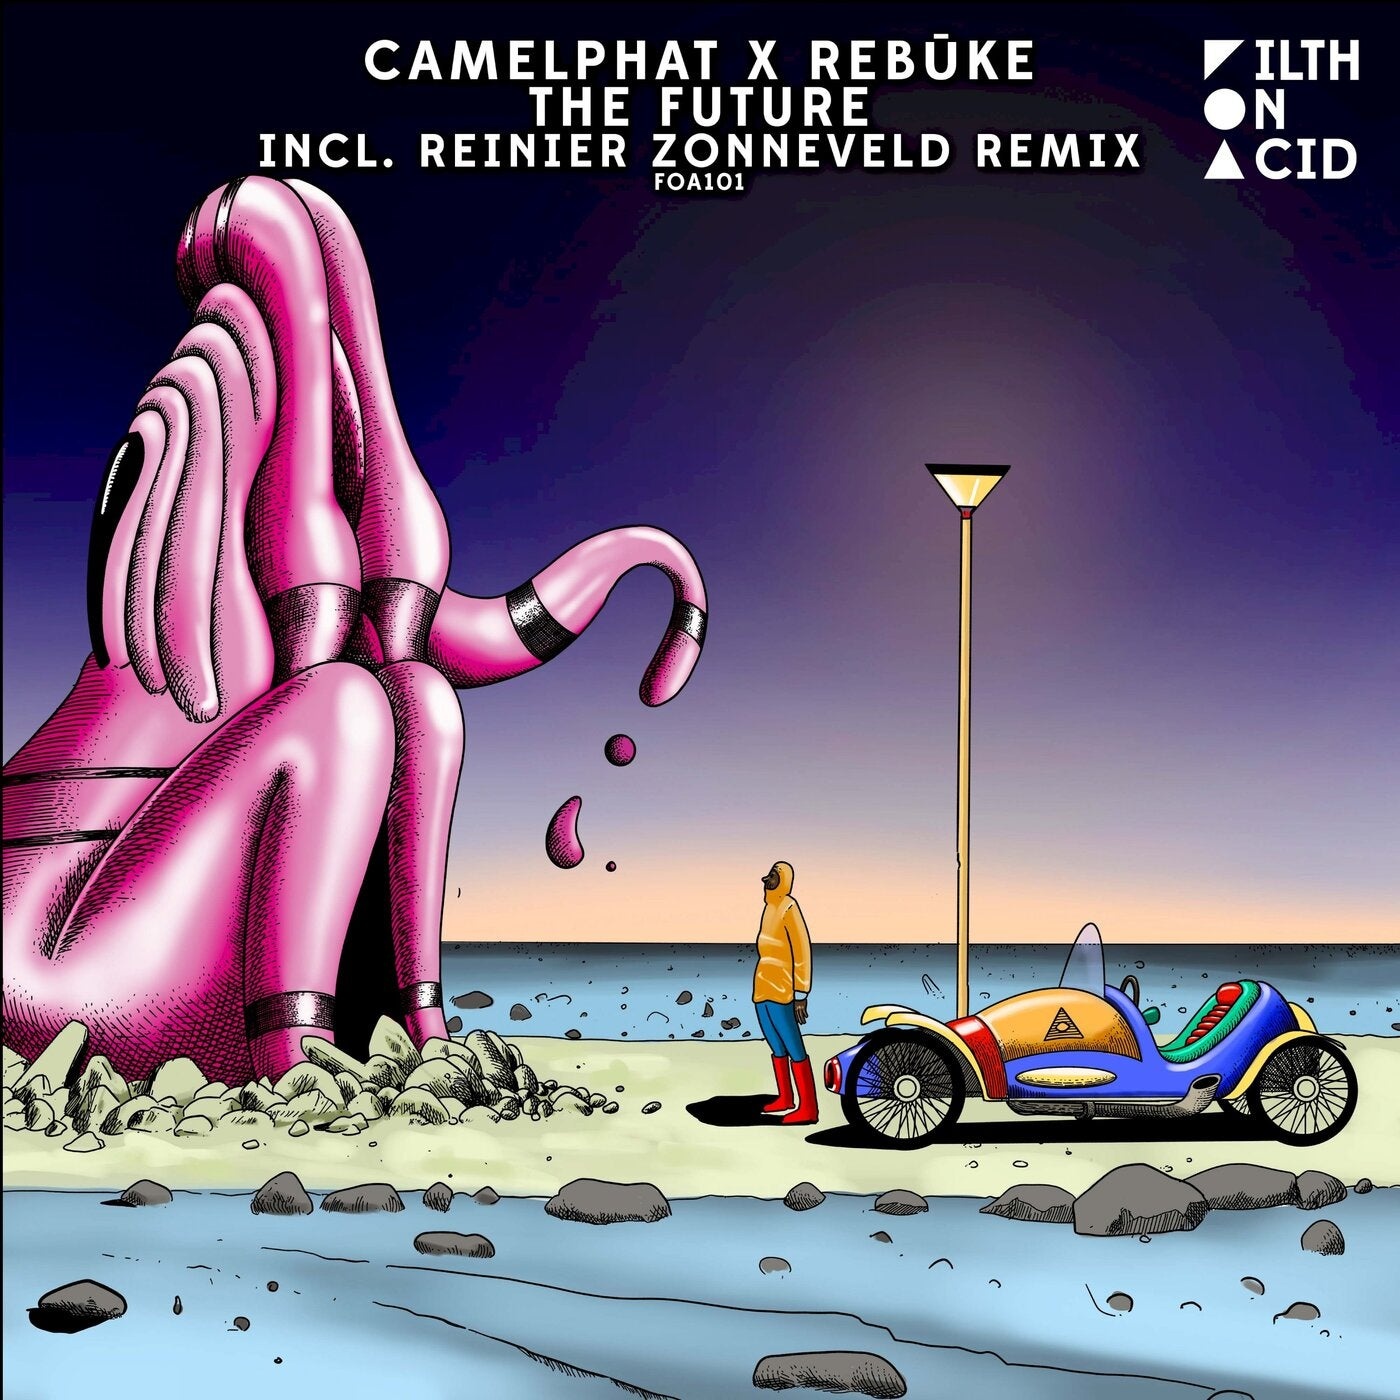 image cover: CamelPhat, Rebuke - The Future / FOA101